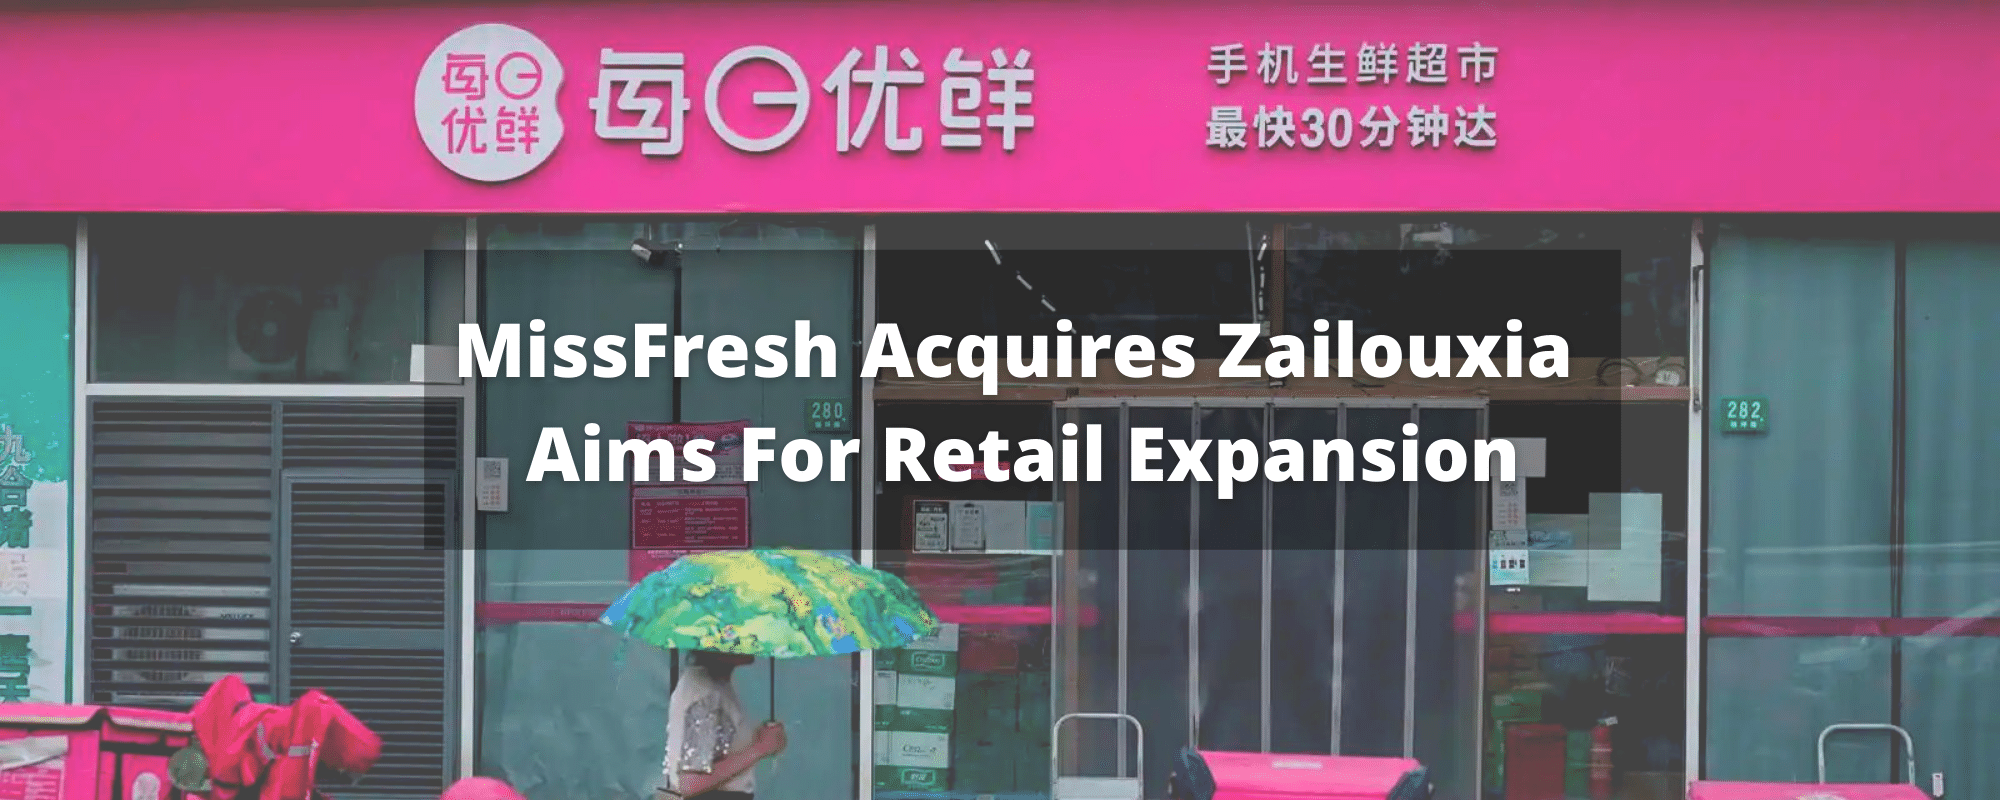 missfresh acquires zailouxia